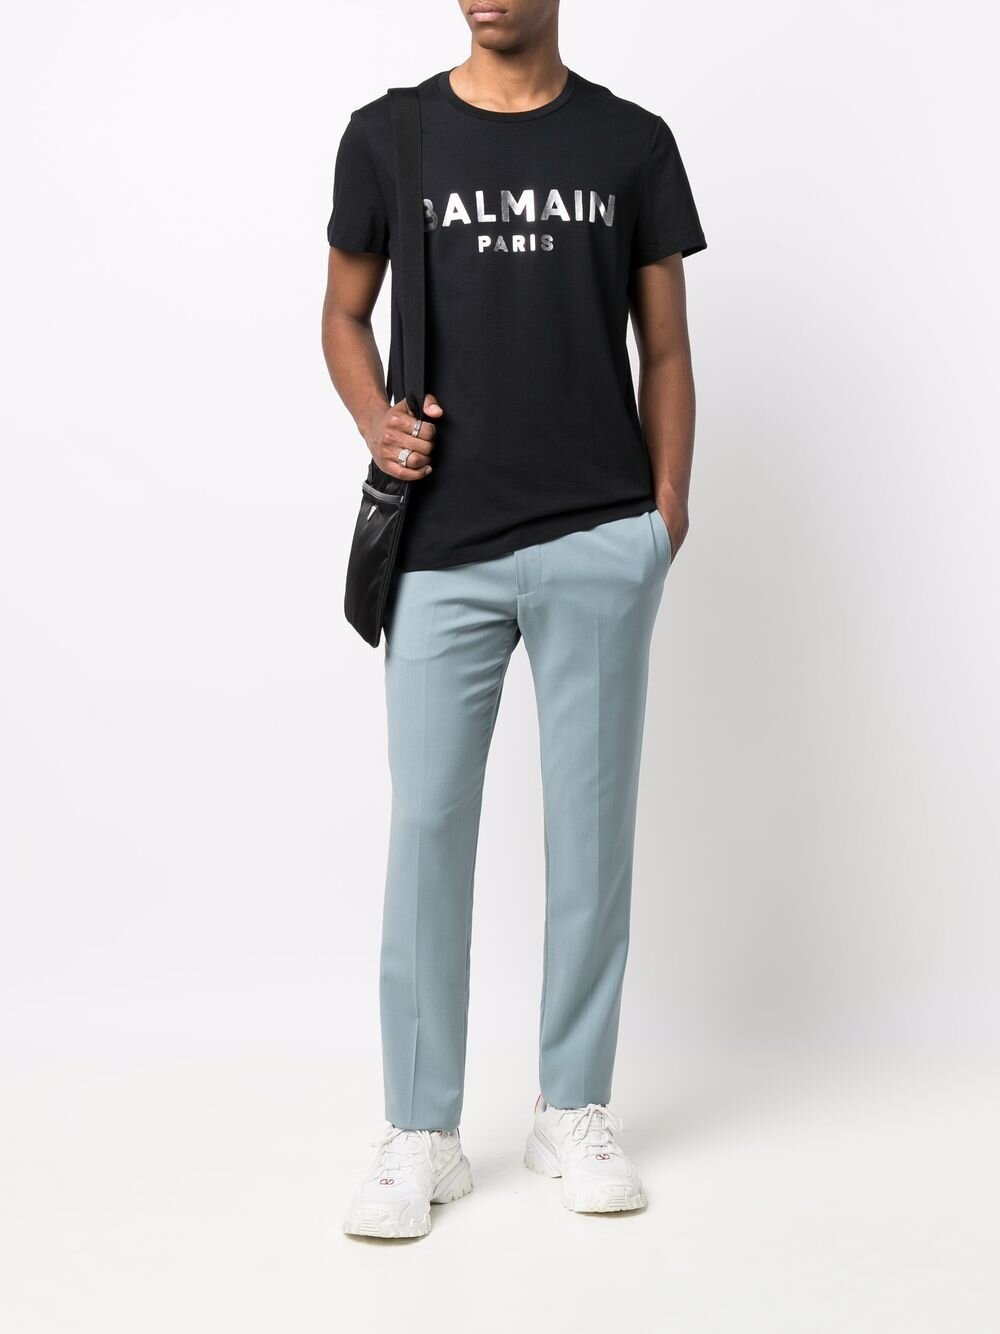 Balmain Silver logo print T-Shirt in Black